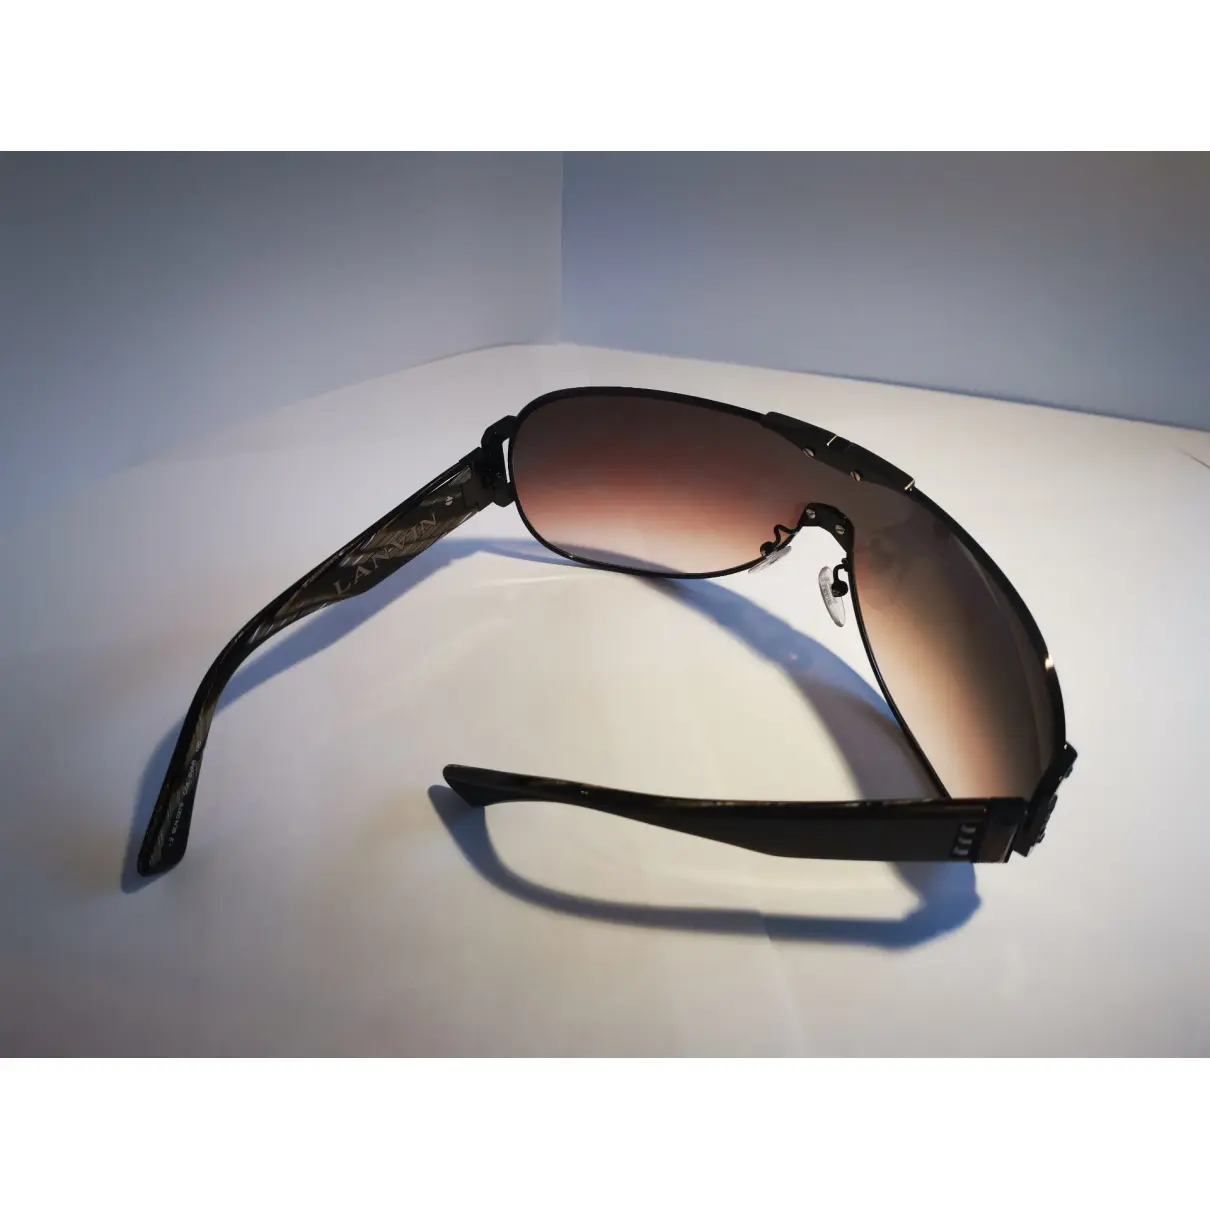 Buy Lanvin Oversized sunglasses online